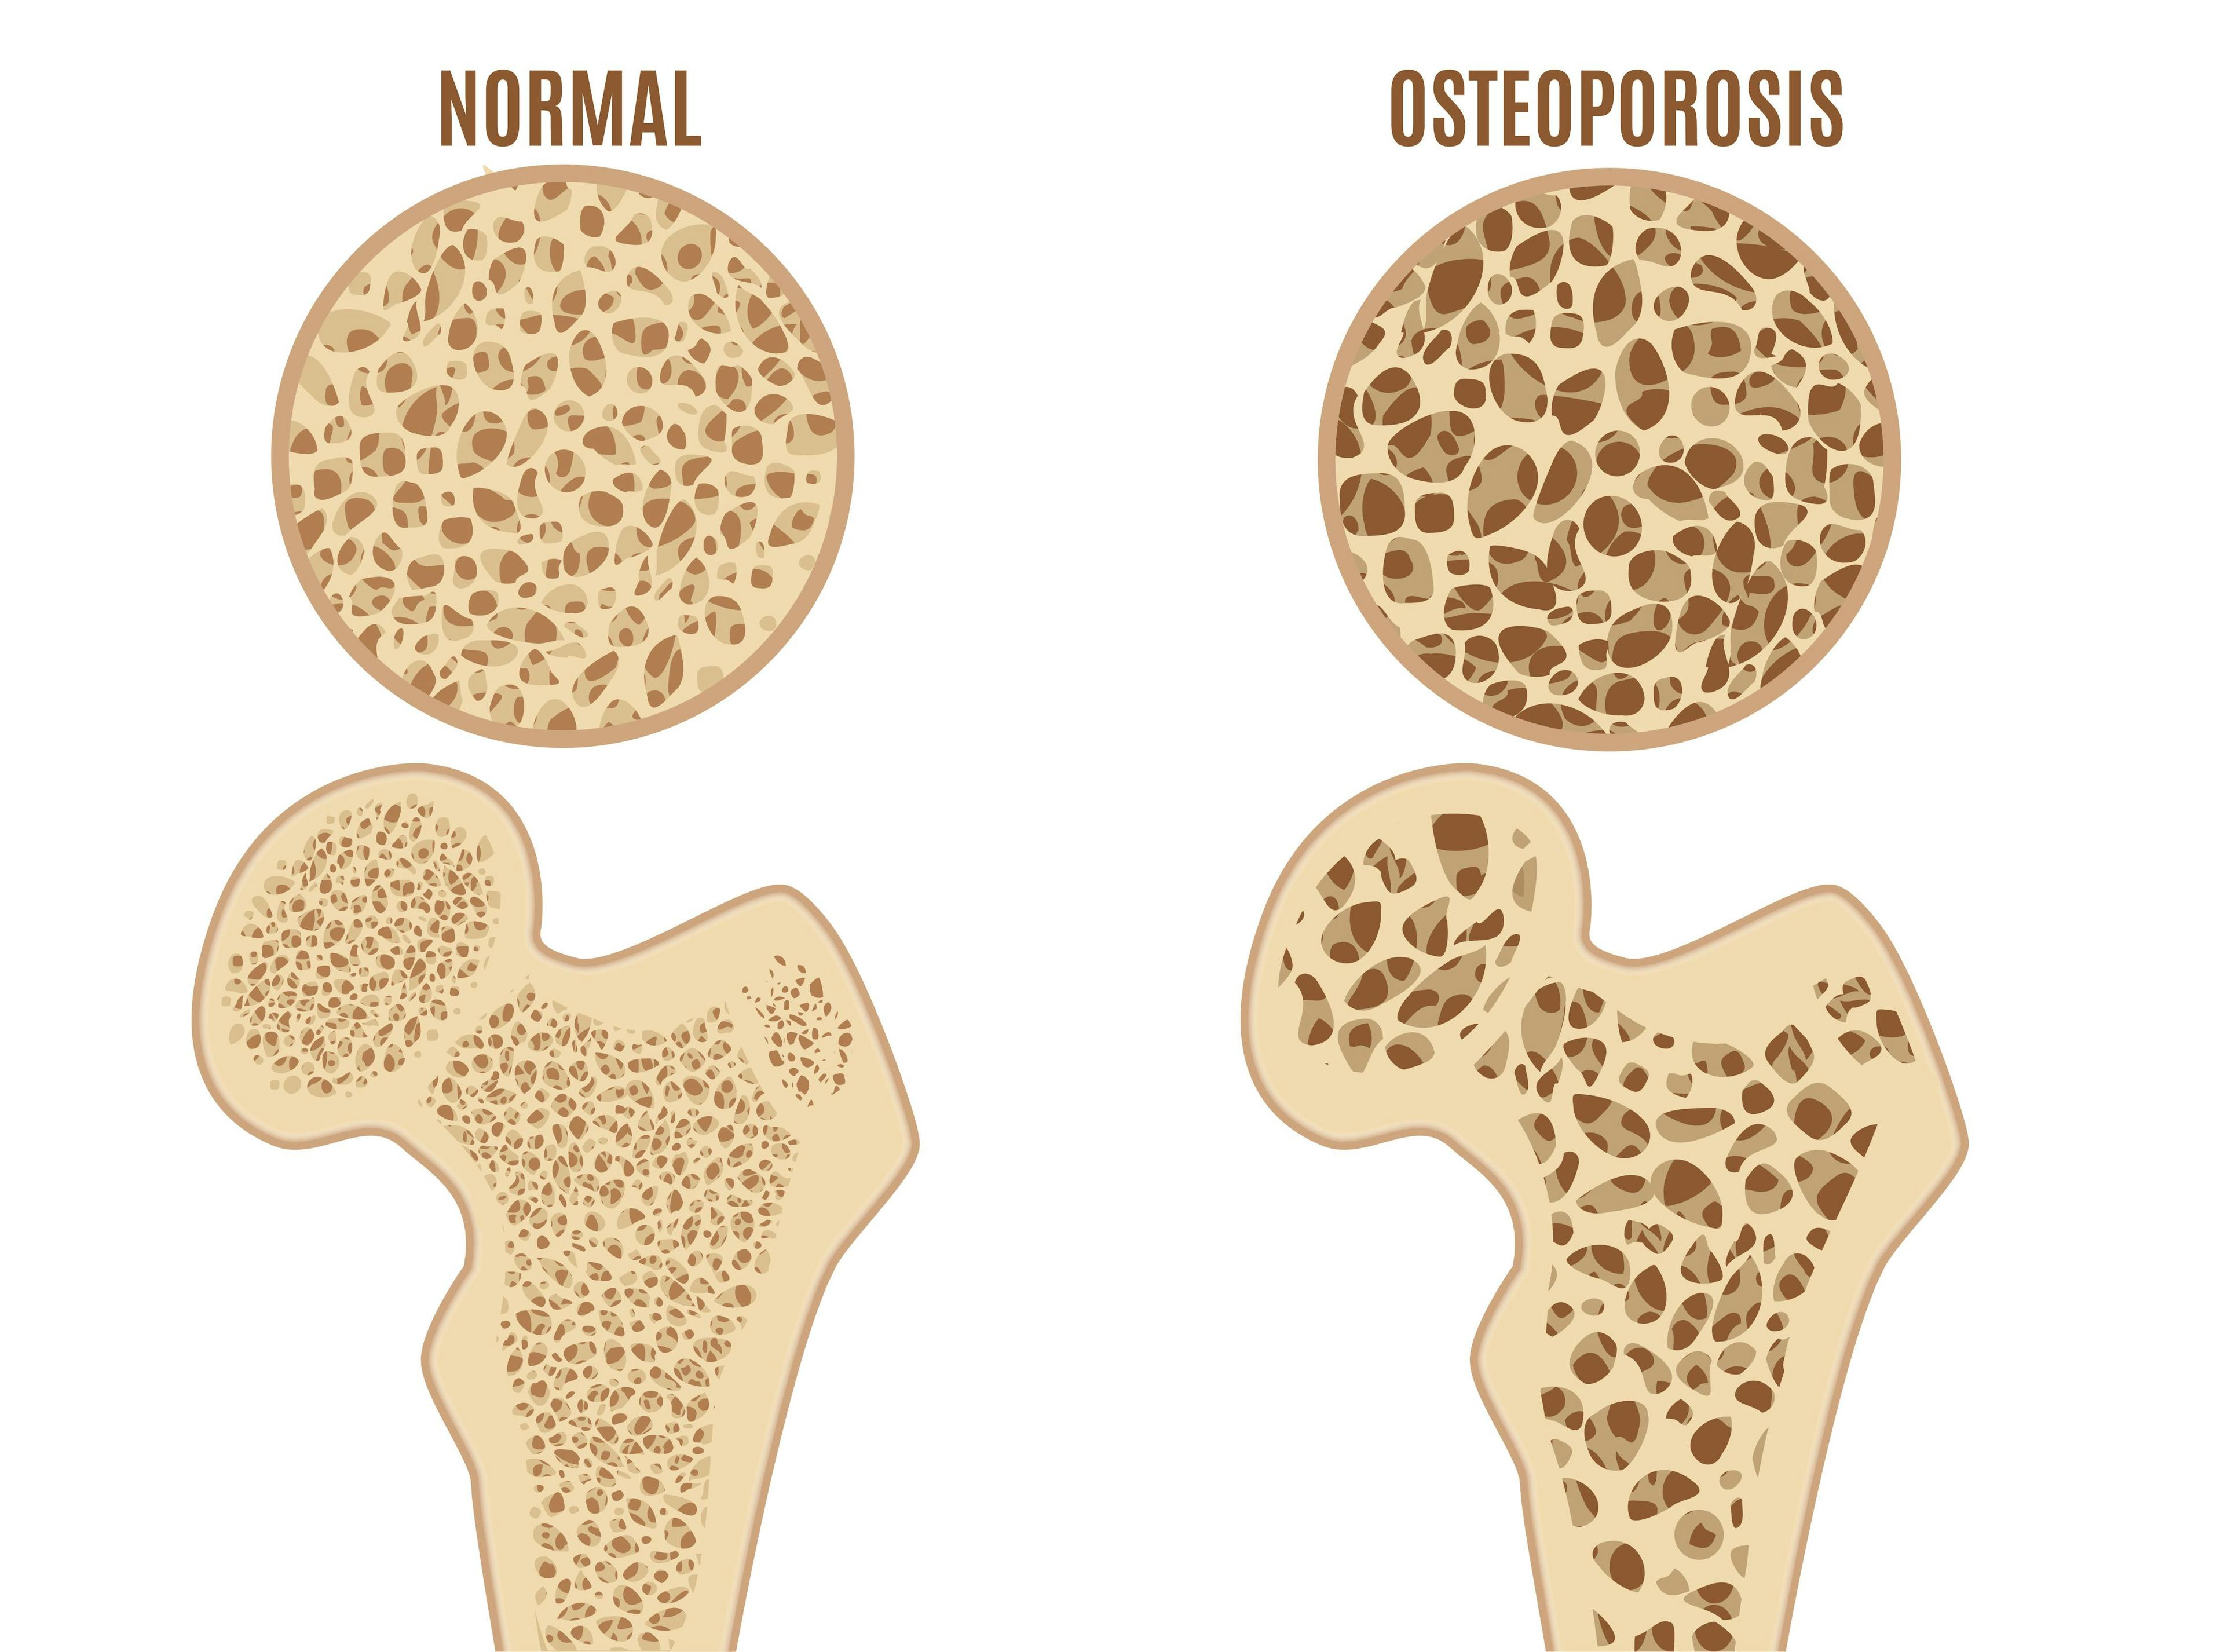 osteoporosis bone difference | Image credit: bigmouse108 - stock.adobe.com